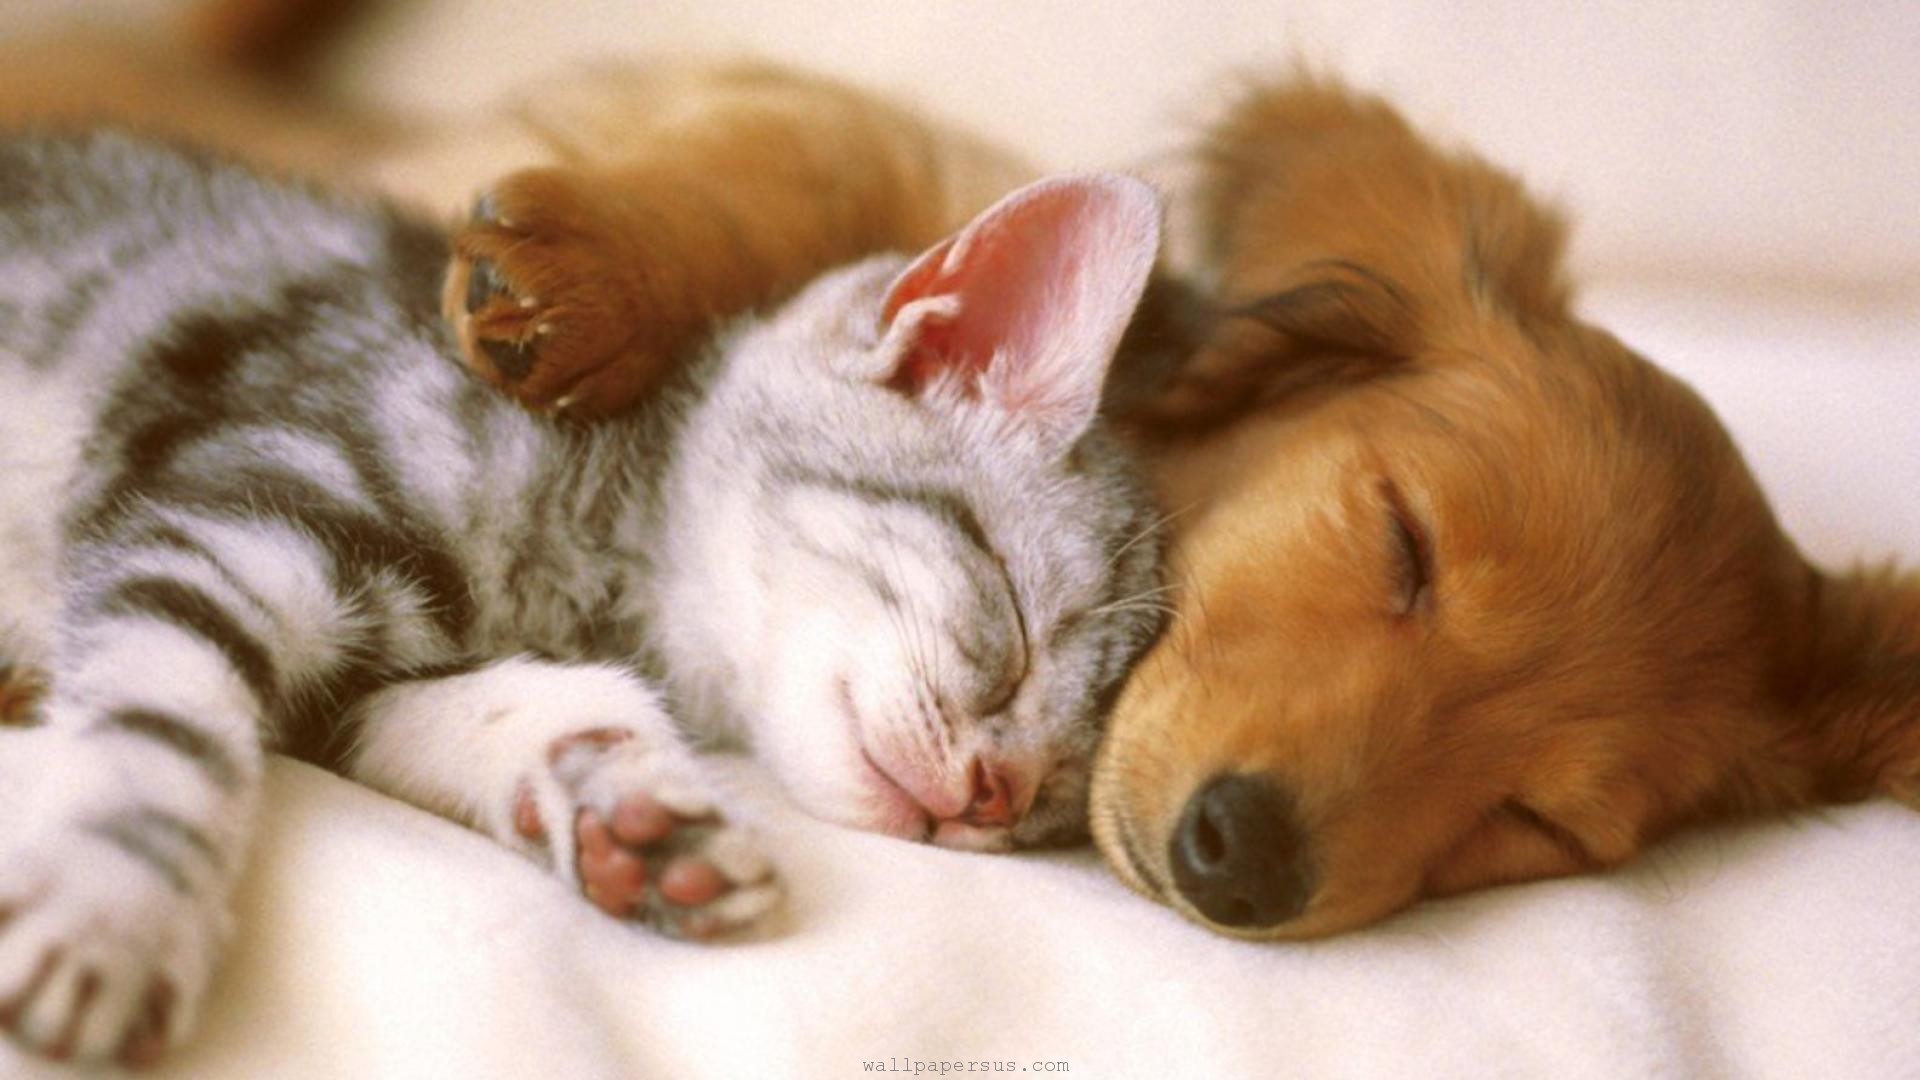 Wallpapers Kittens Puppy Tight Cuddling Friends Kitten Sleeping Us